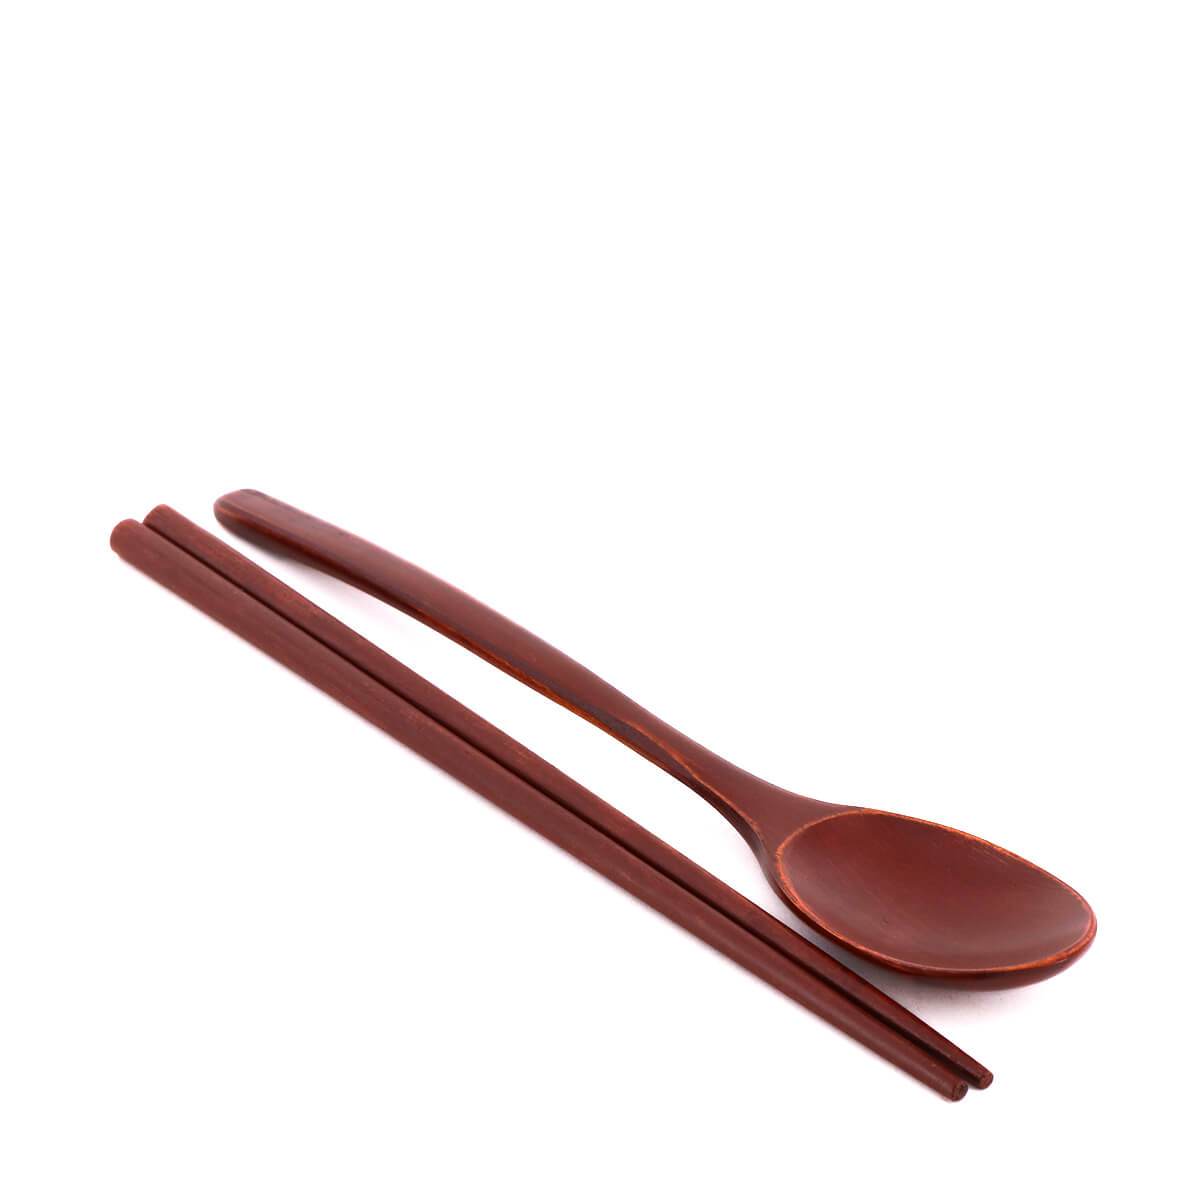 OTCHIL Wooden Spoon & Chopsticks Set